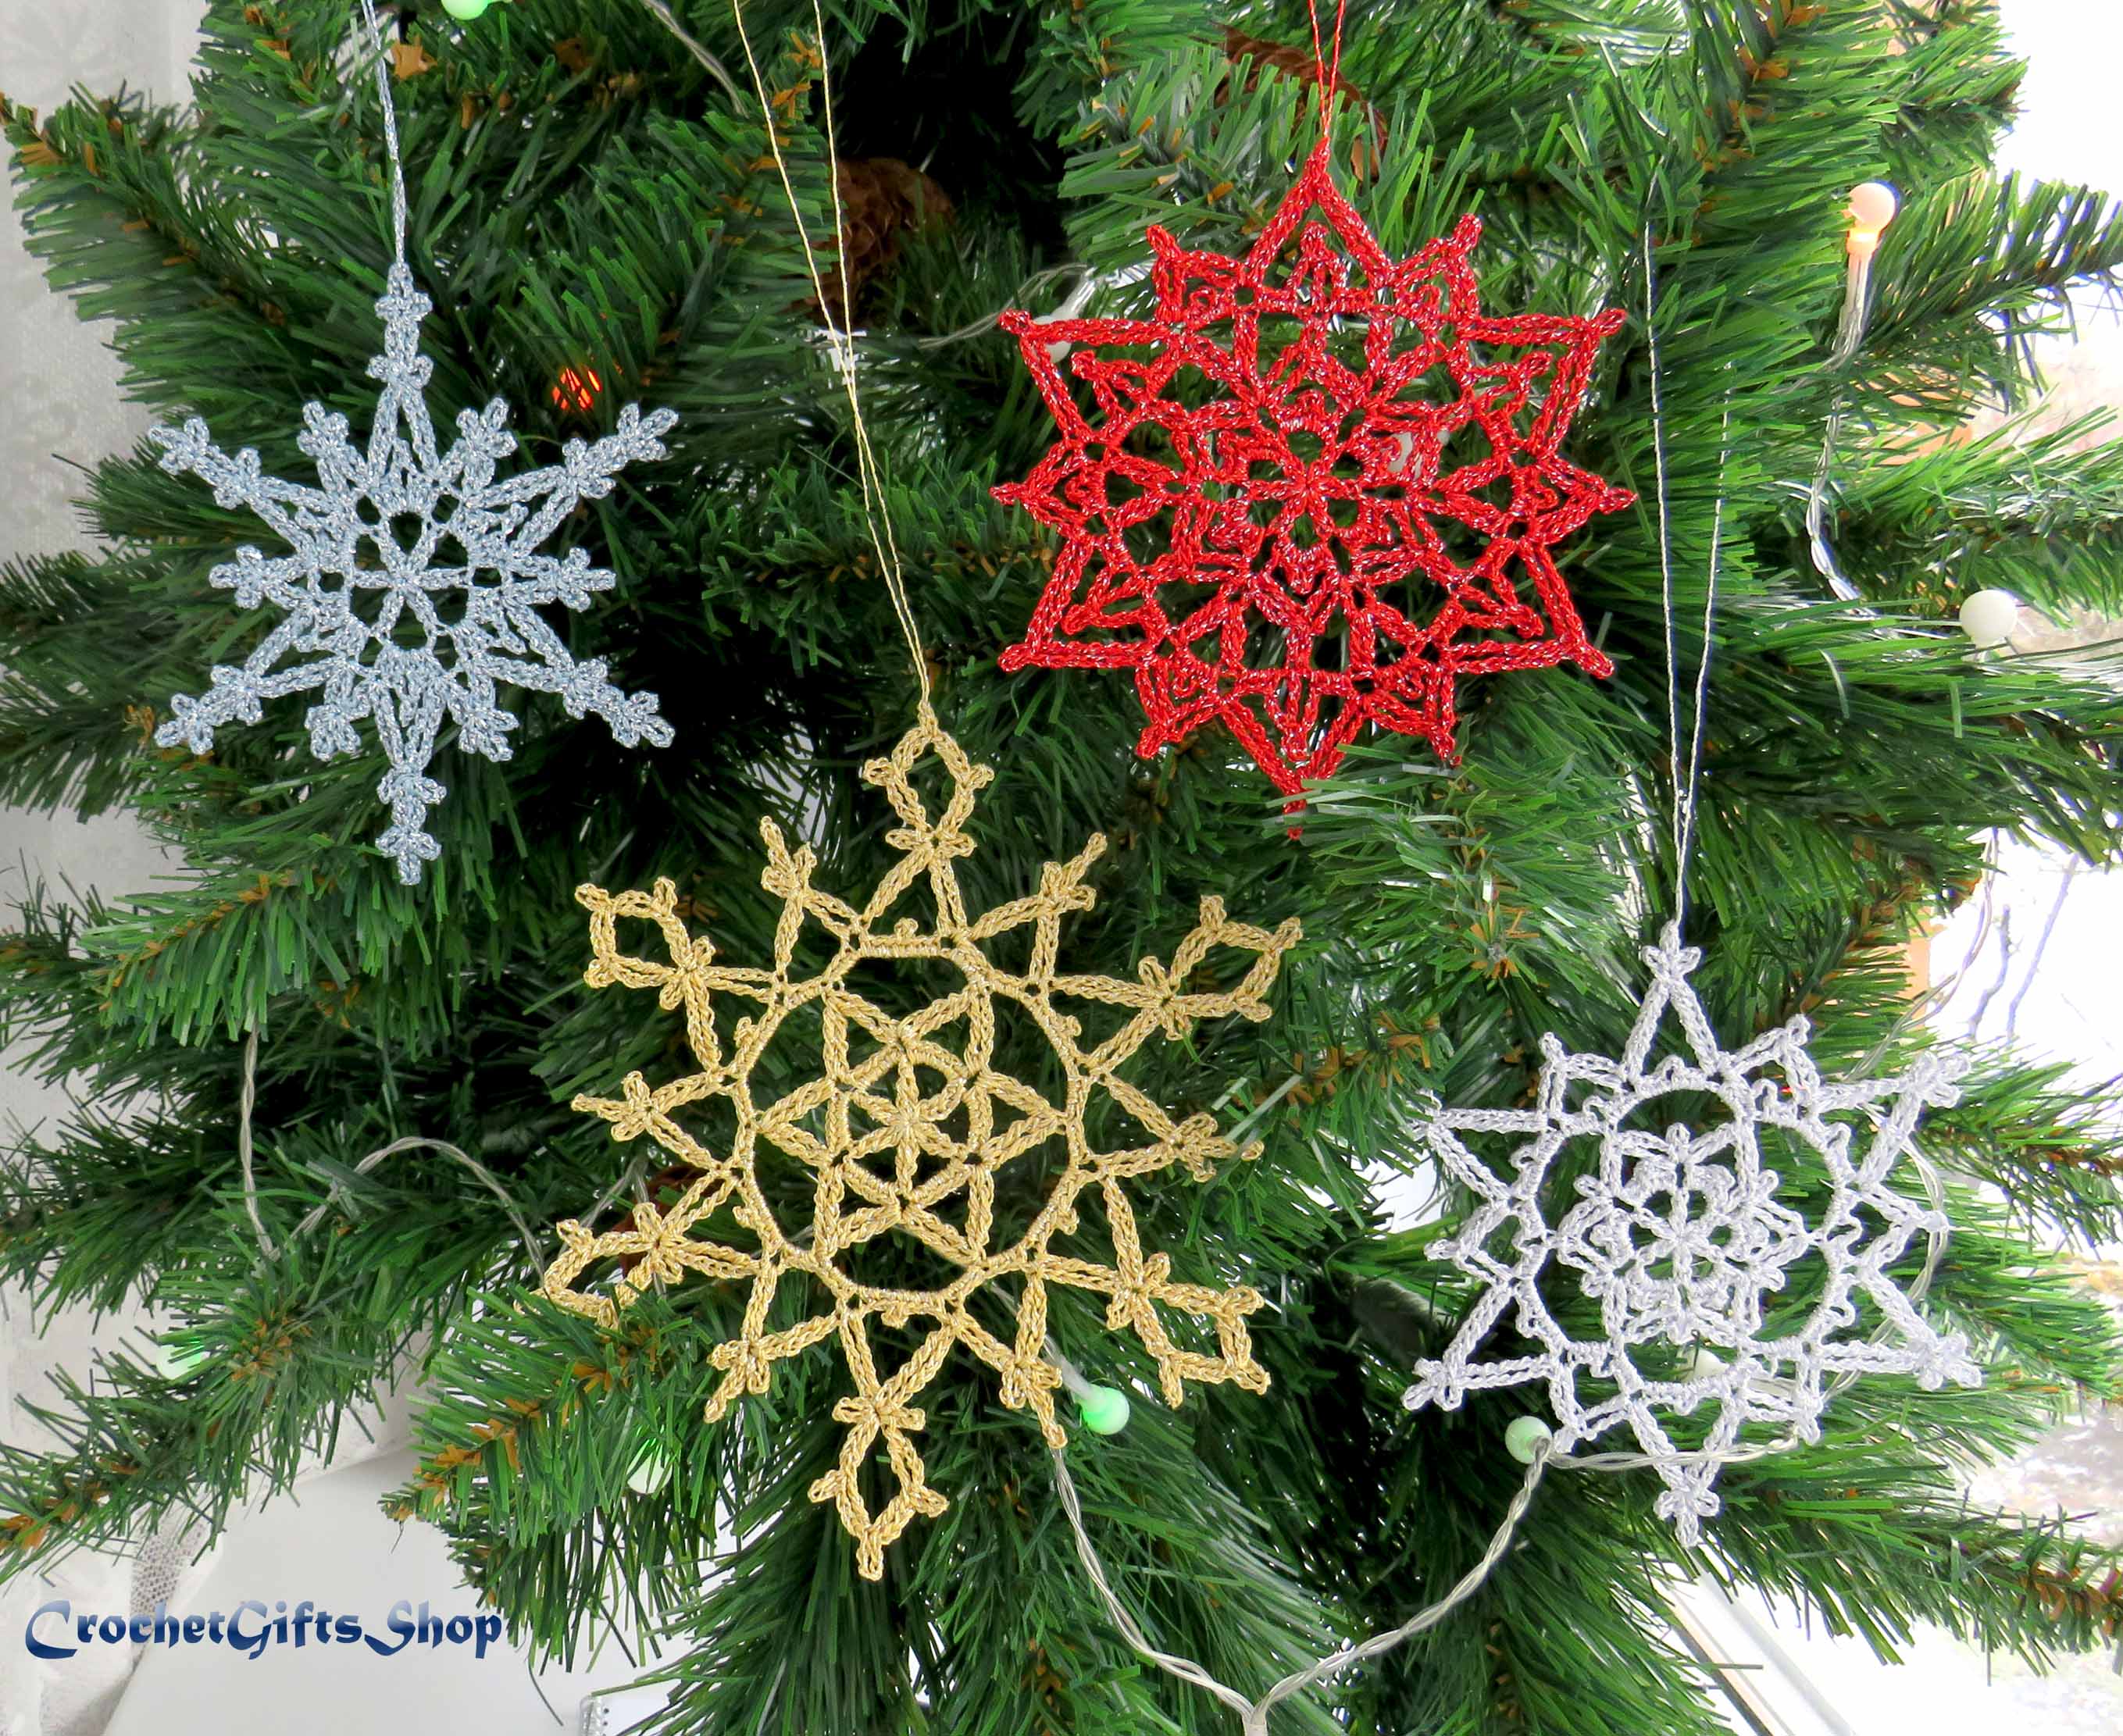 Crocheted Snowflake Decor : snowflake decor